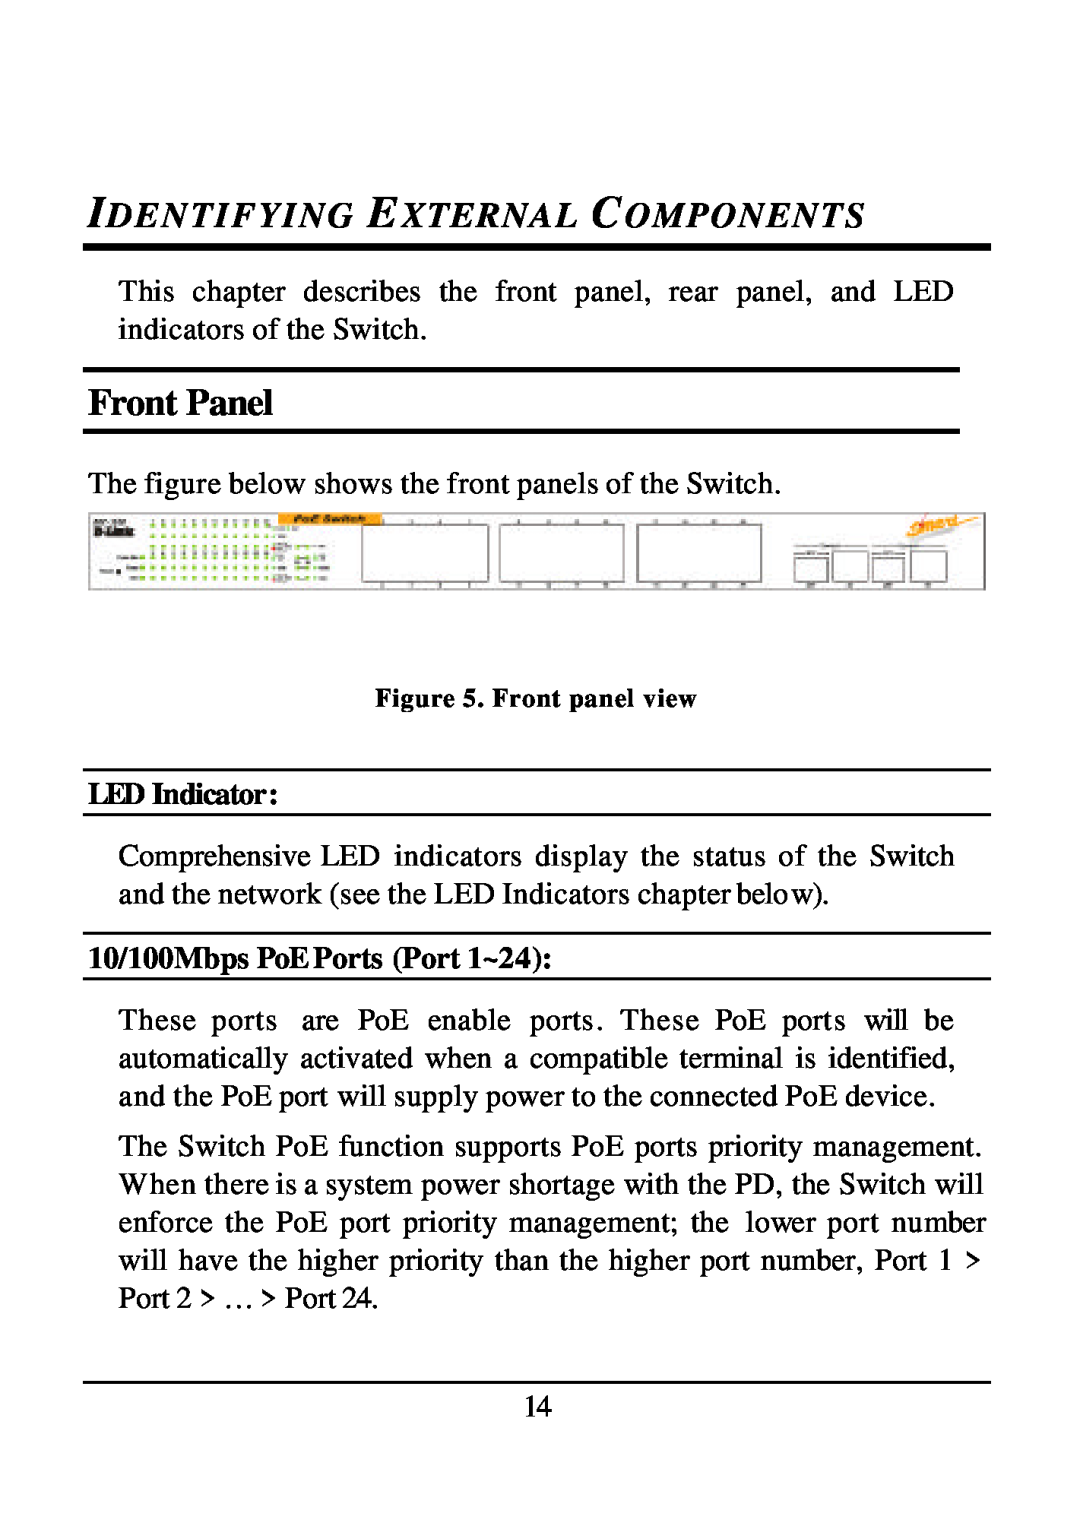 D-Link DES-1526 manual Front Panel, Identifying External Components 